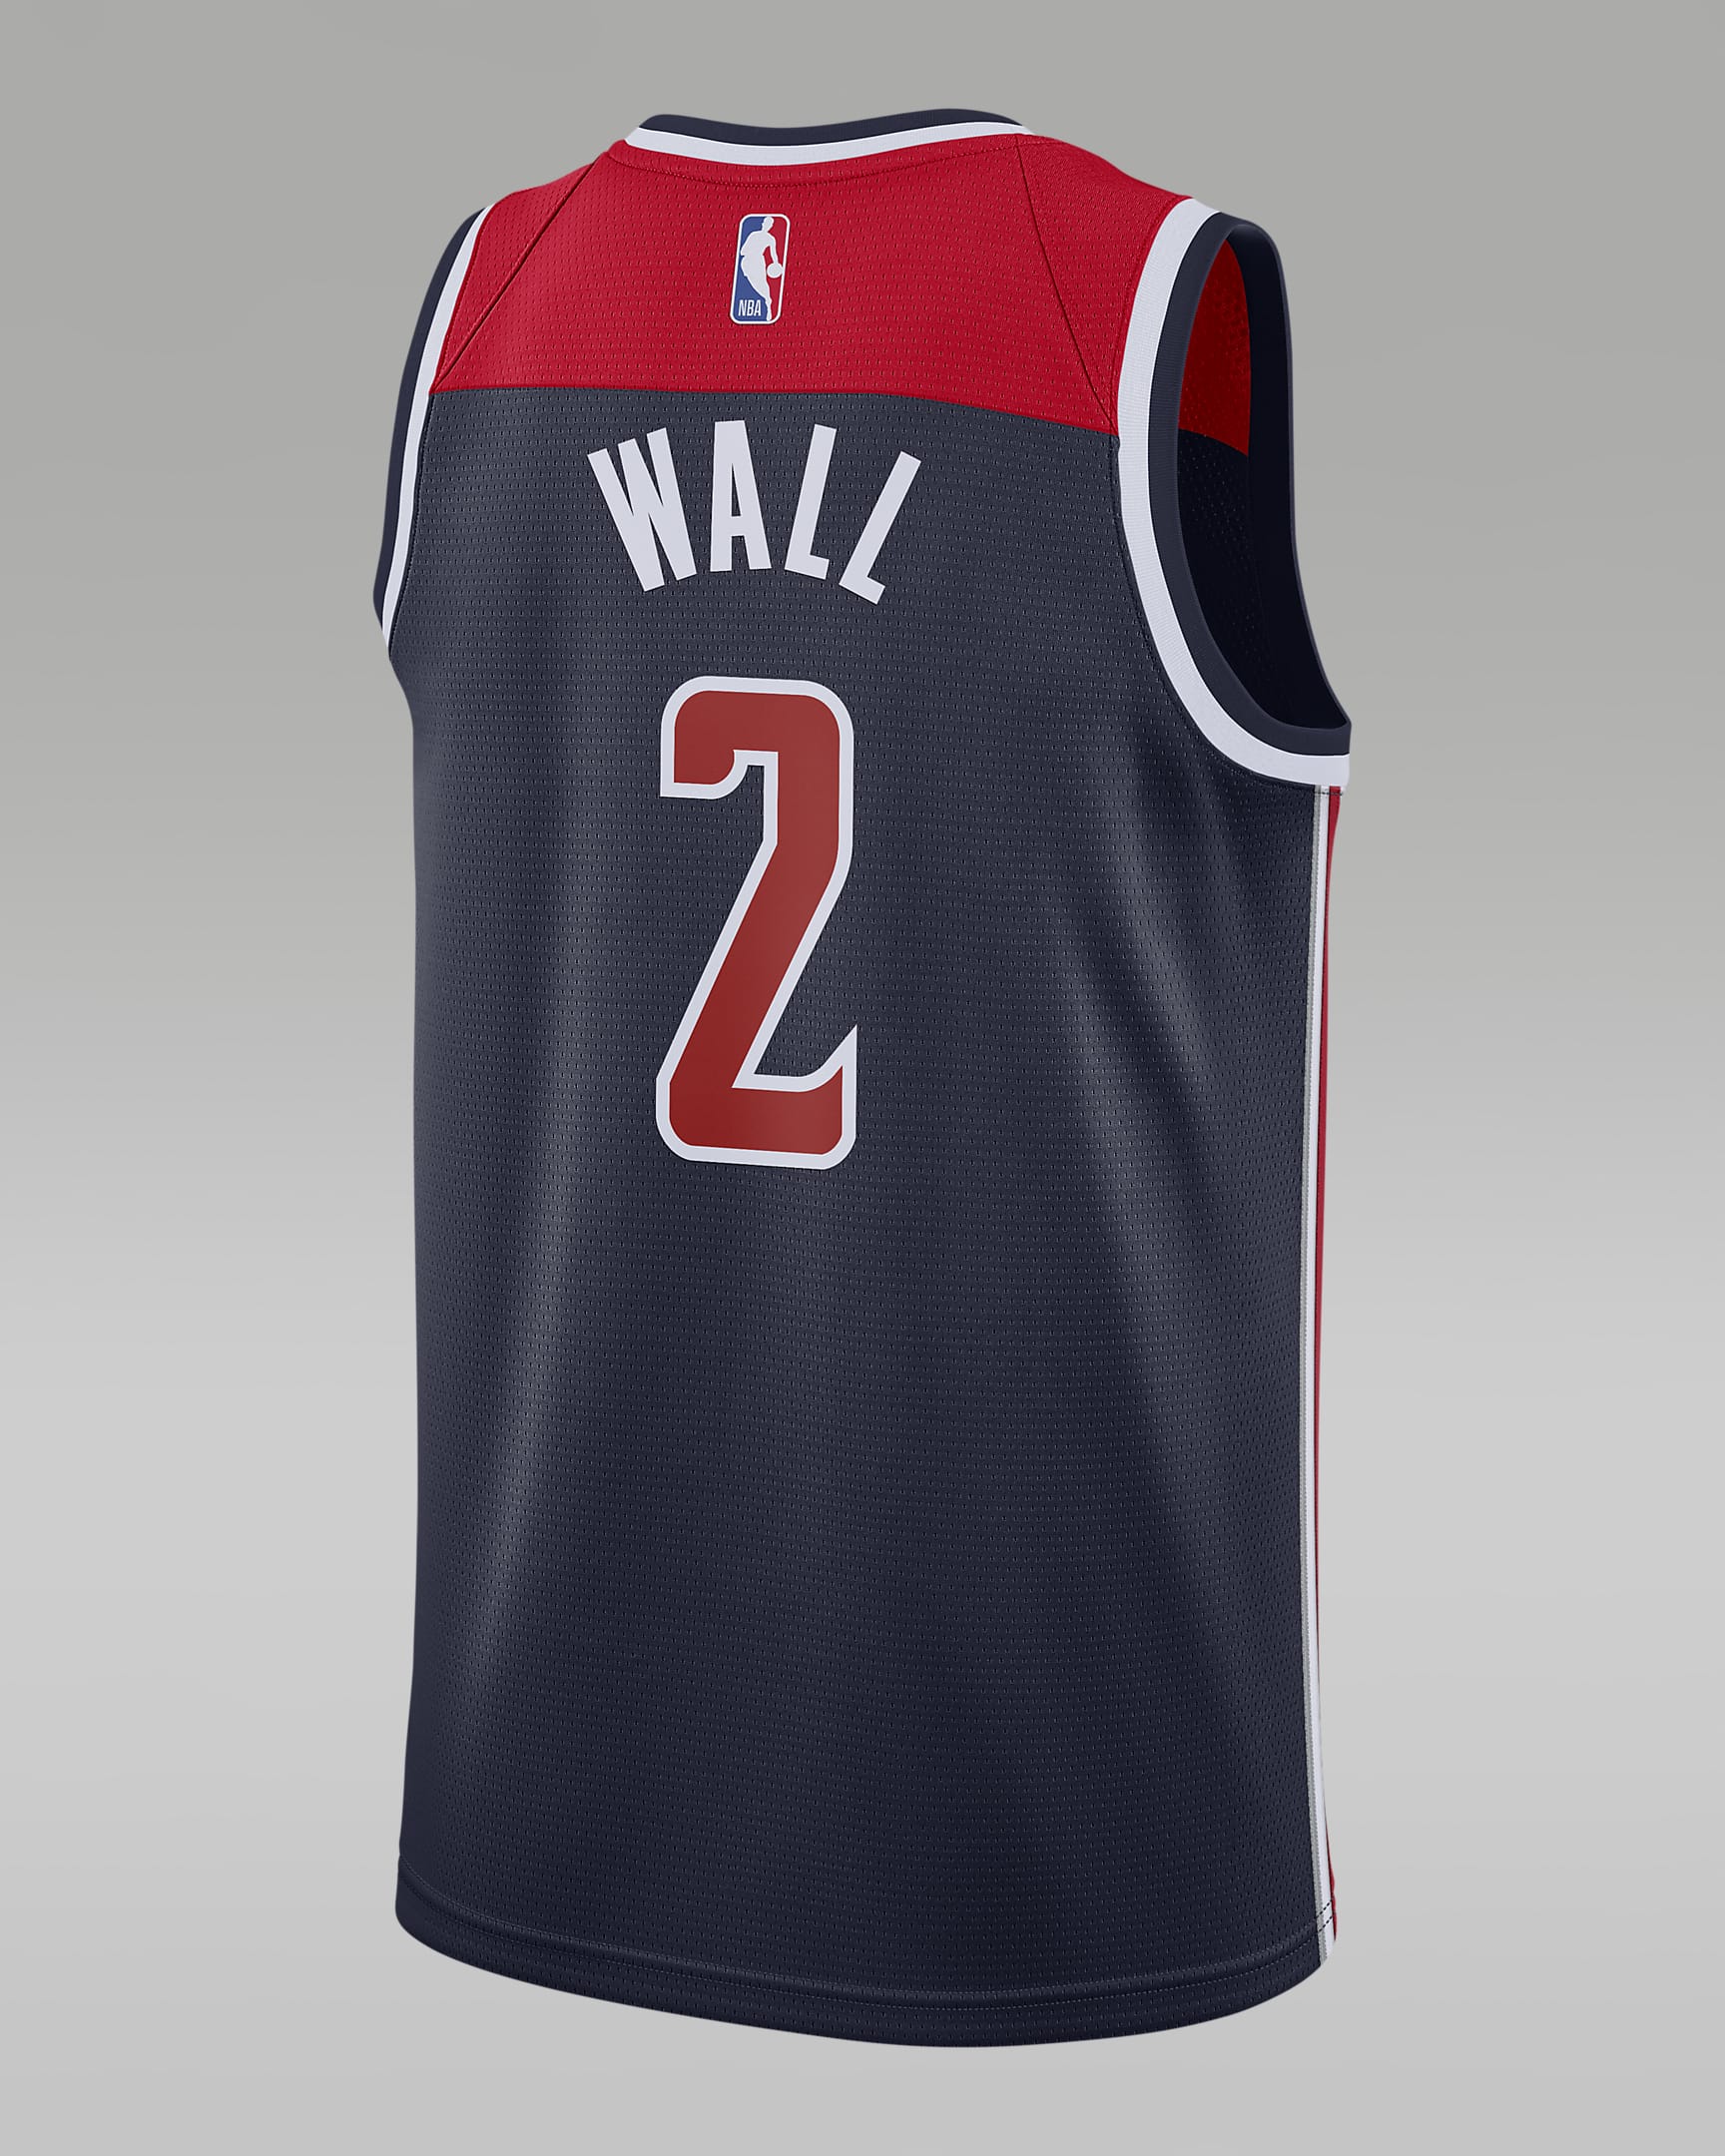 Camiseta Jordan Nike NBA Swingman John Wall Wizards Statement Edition ...